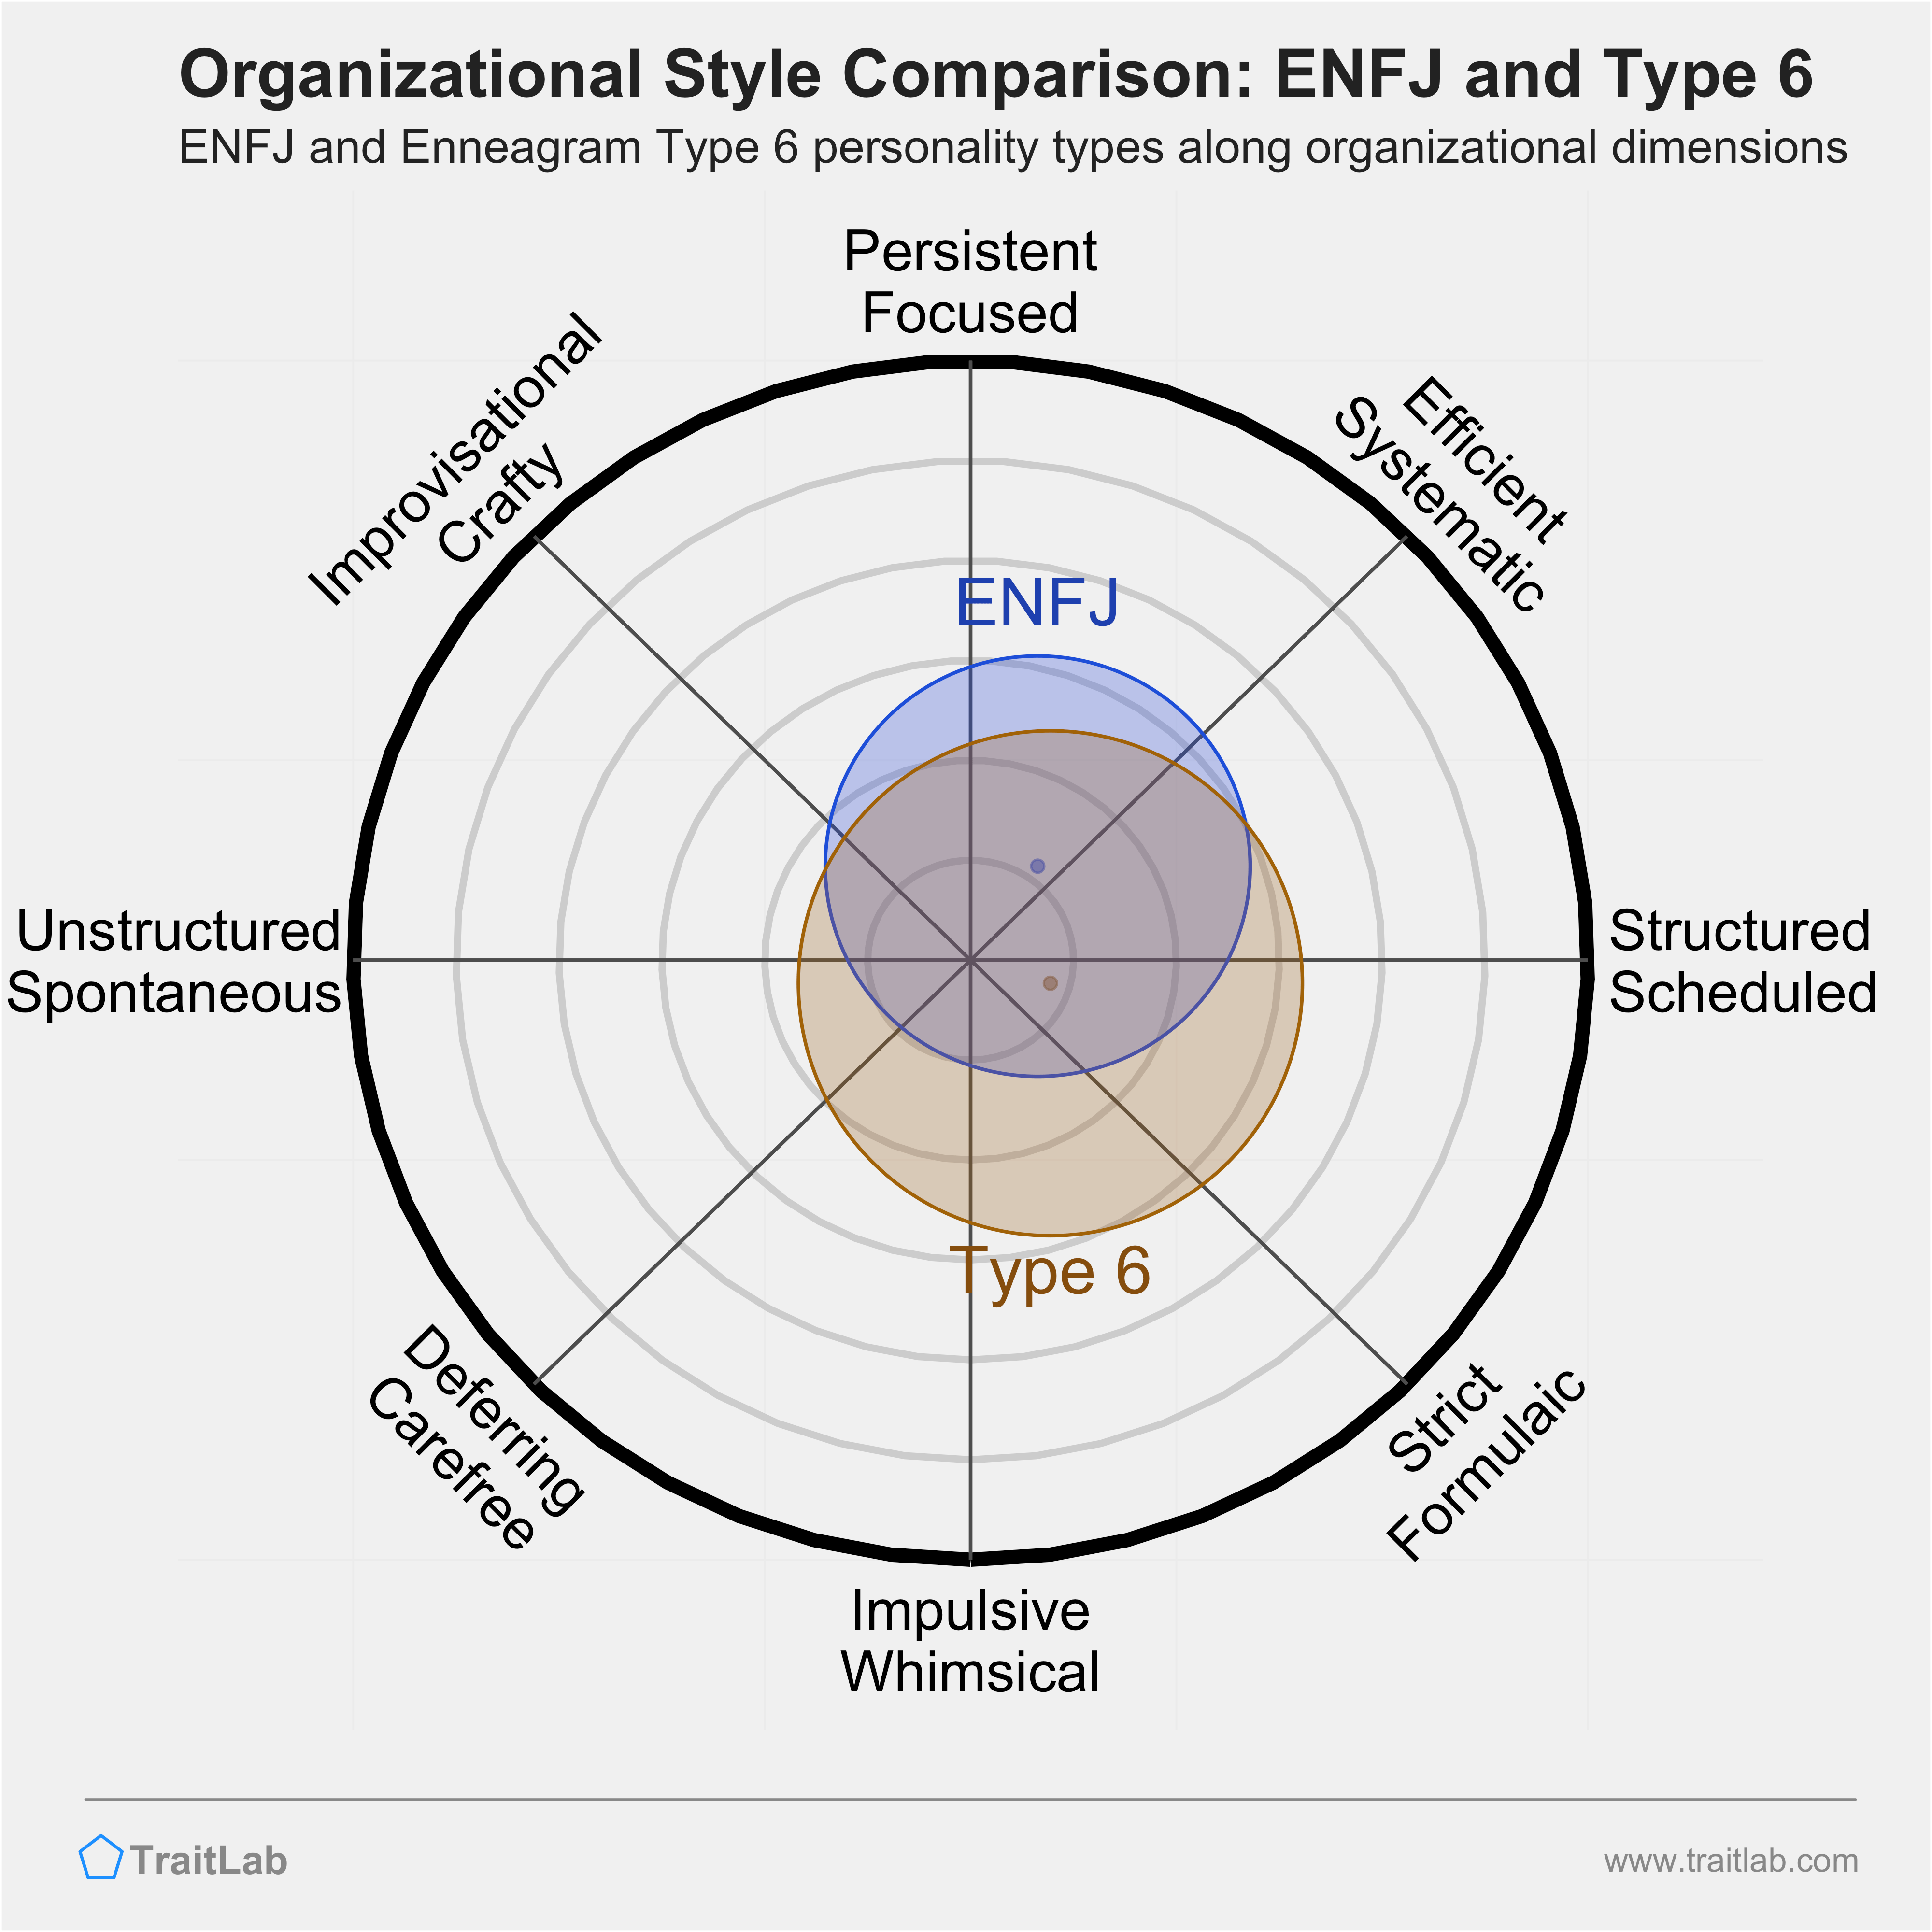 ENFJ and Type 6 comparison across organizational dimensions